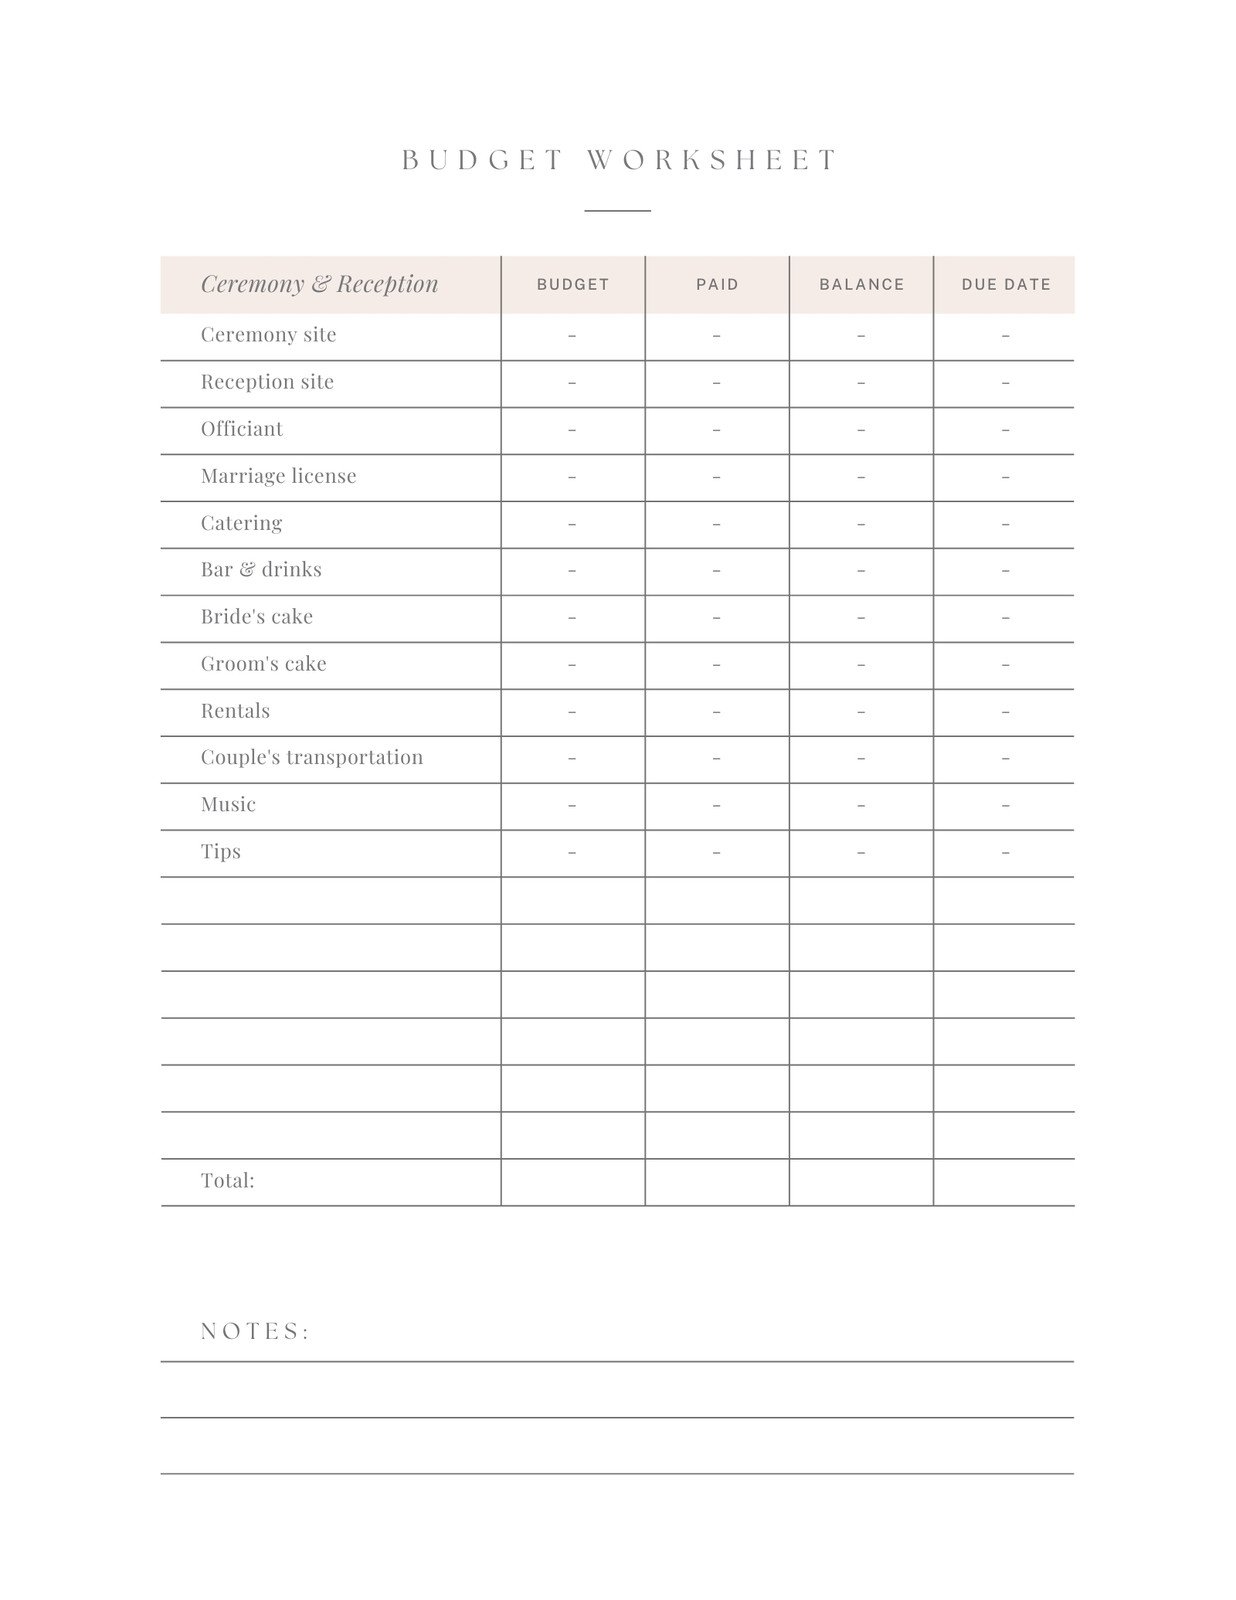 Wedding Planner Printable Wedding Planning Book Modern Wedding Organiser  Instant Download 